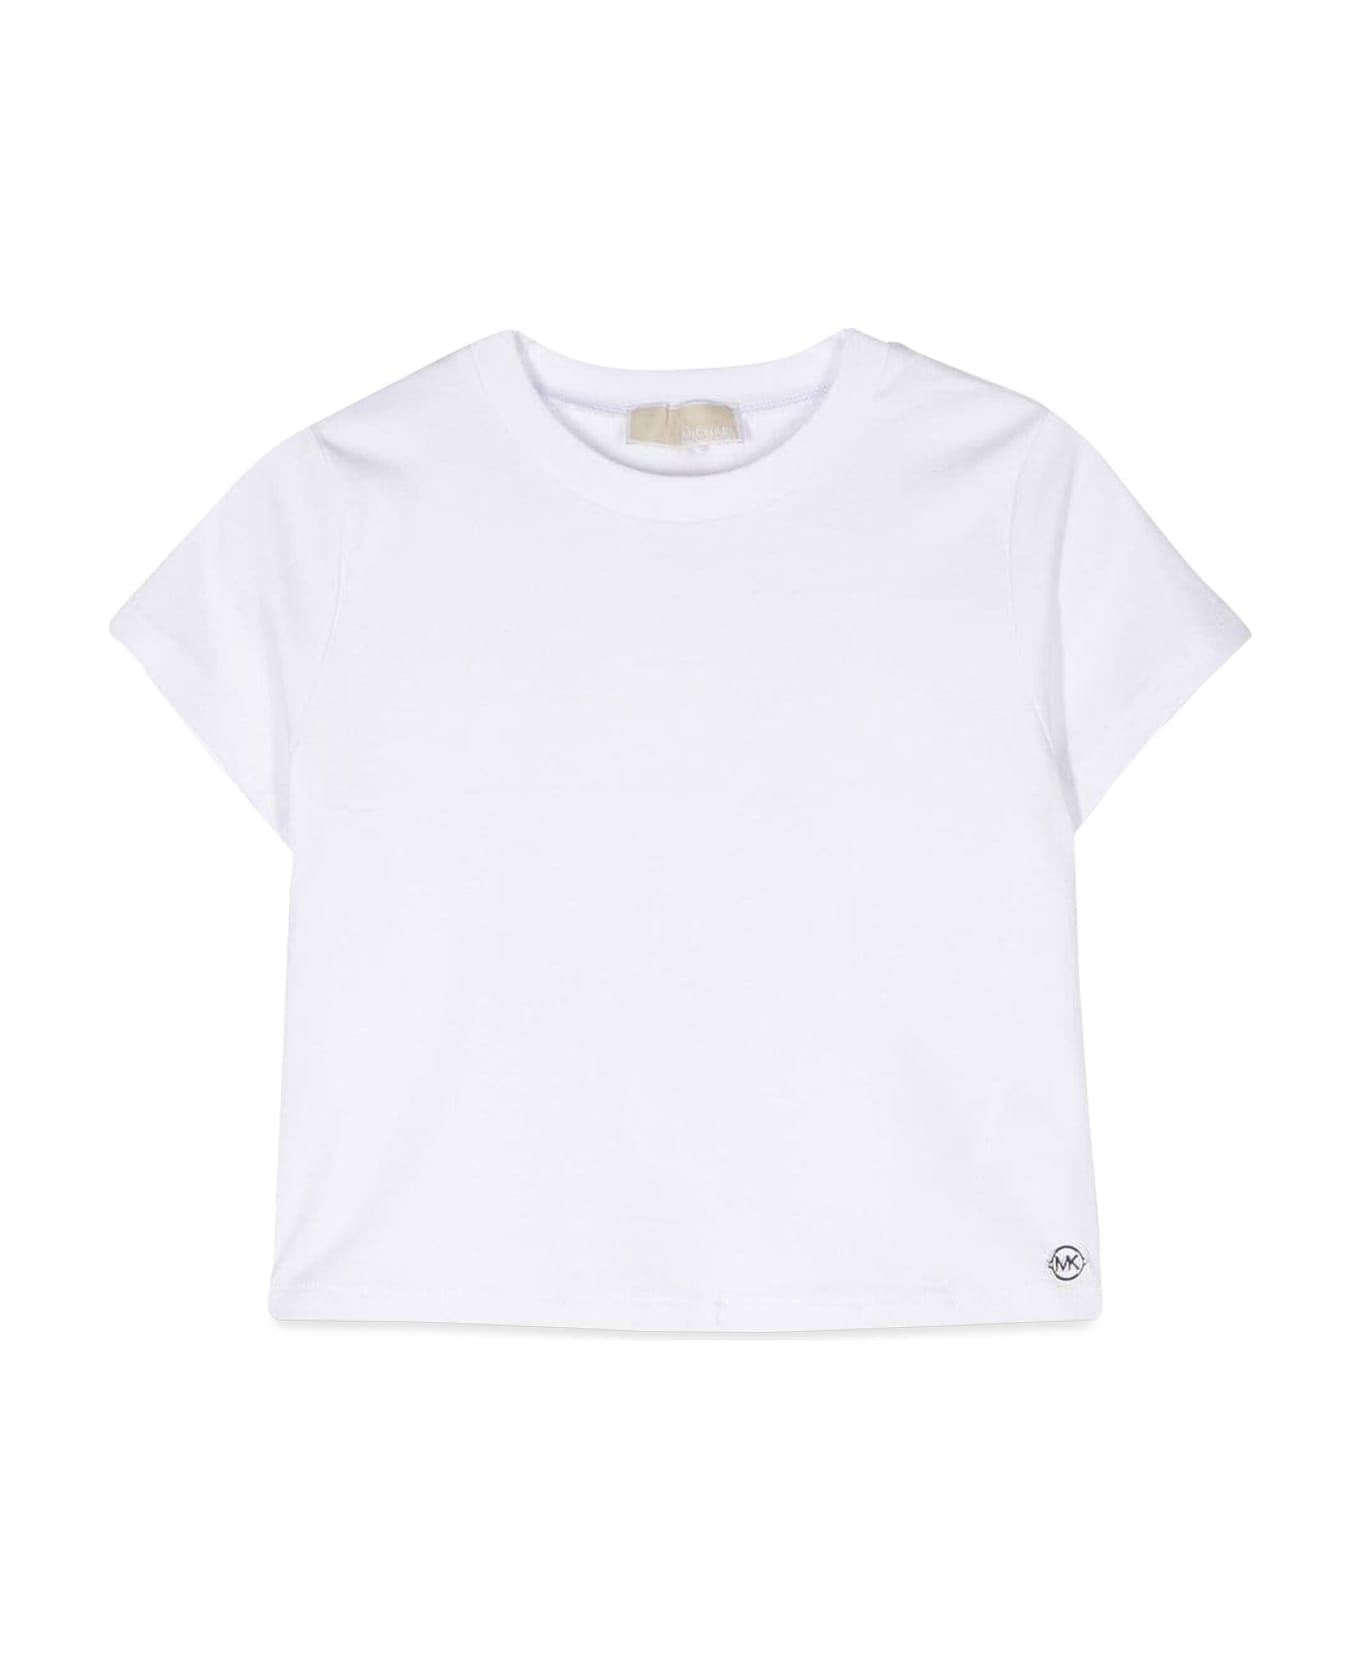 Michael Kors T-shirt - BIANCO